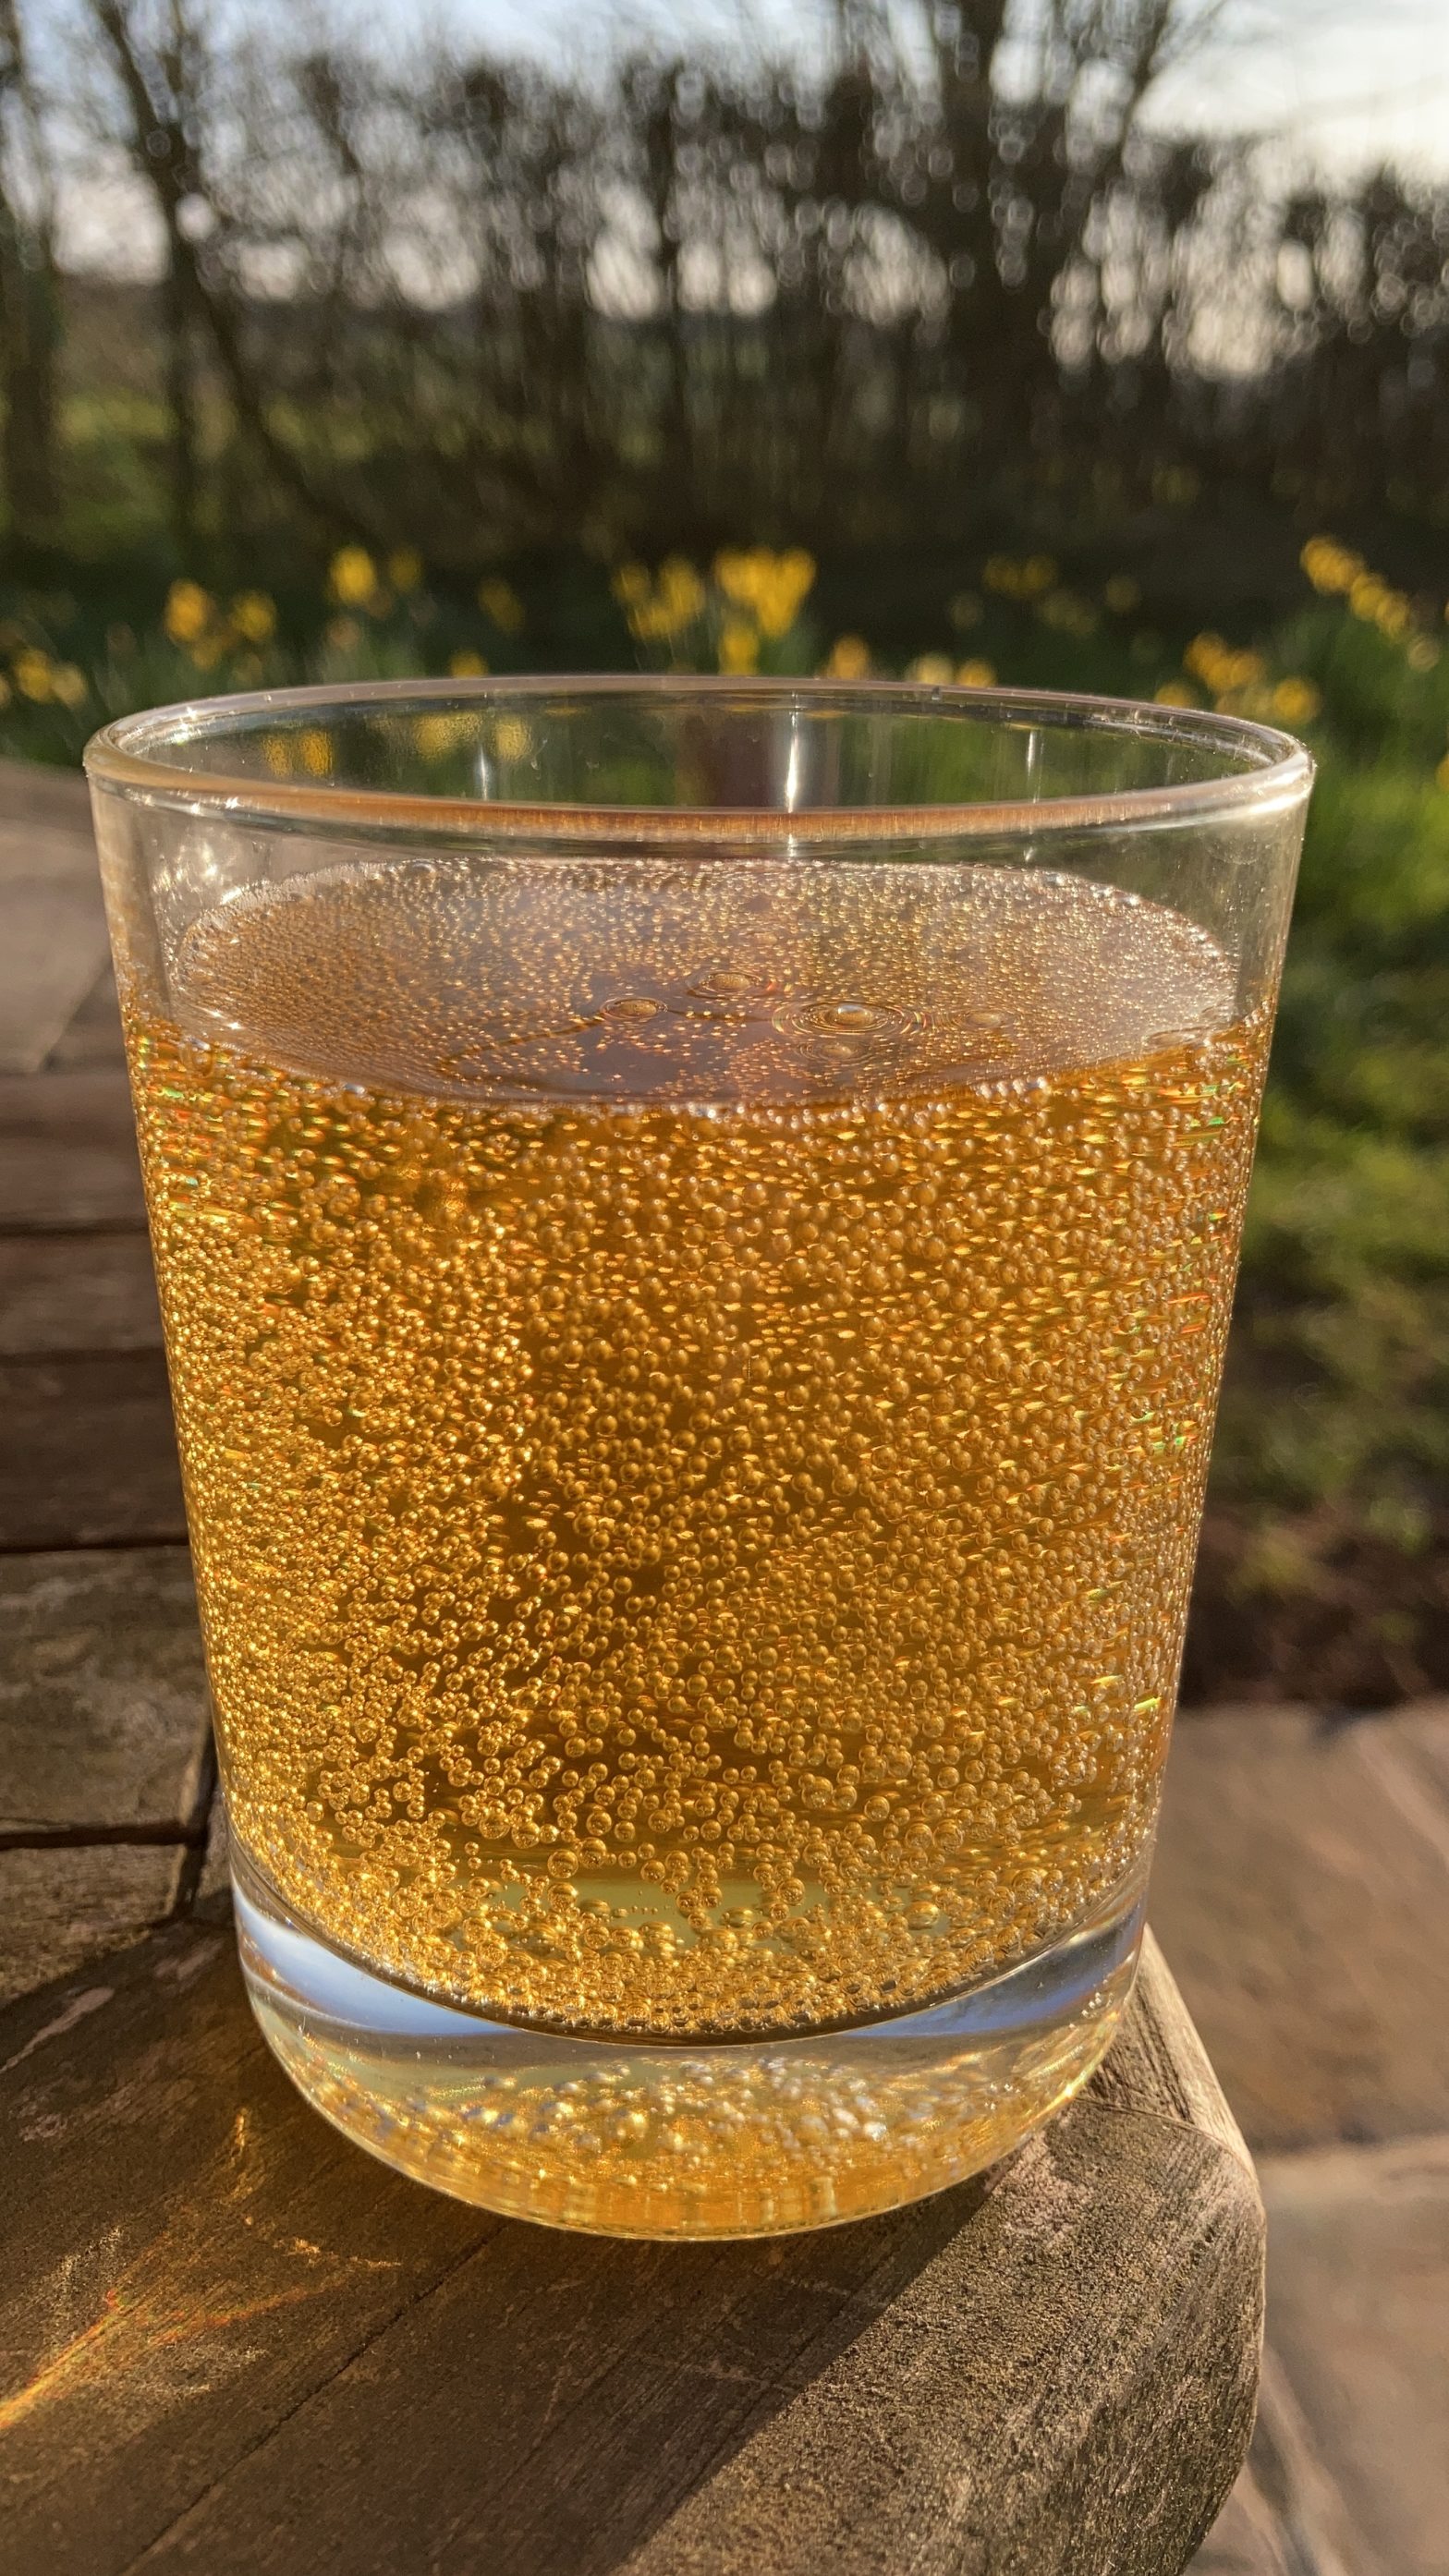 Glass of sparkling Tom Putt cider